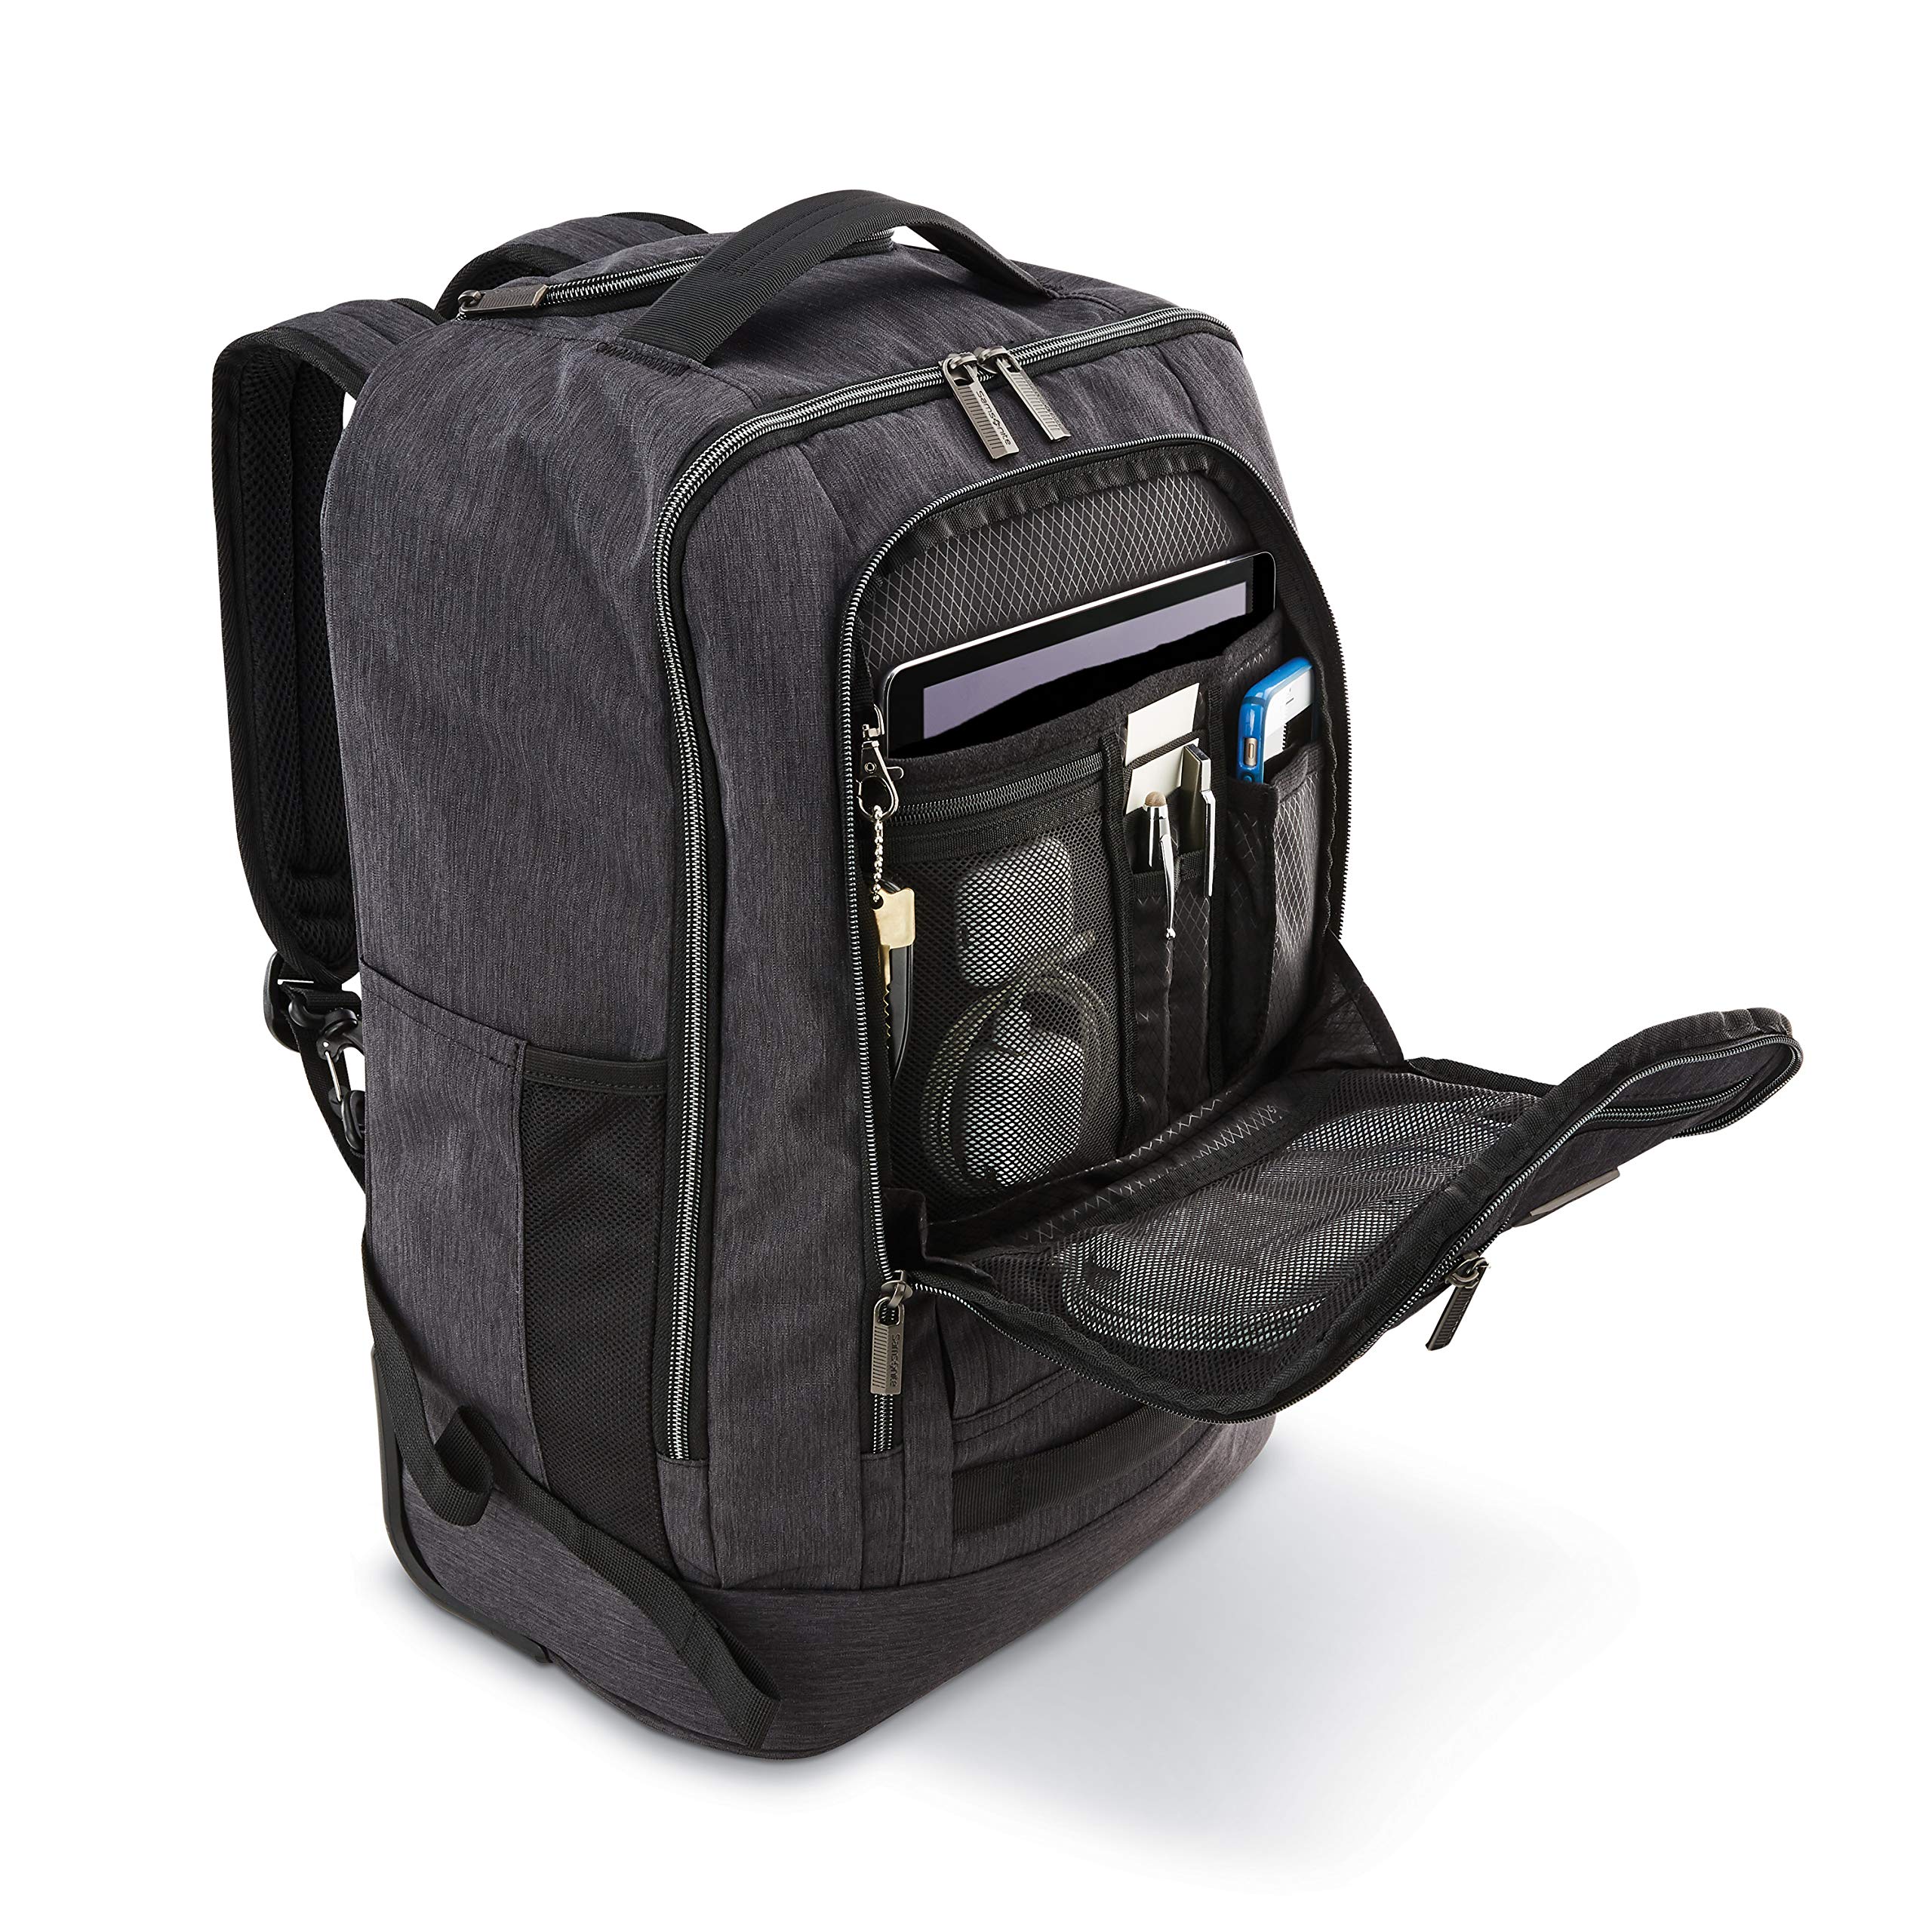 Samsonite Modern Utility Convertible Wheeled Backpack | eBay